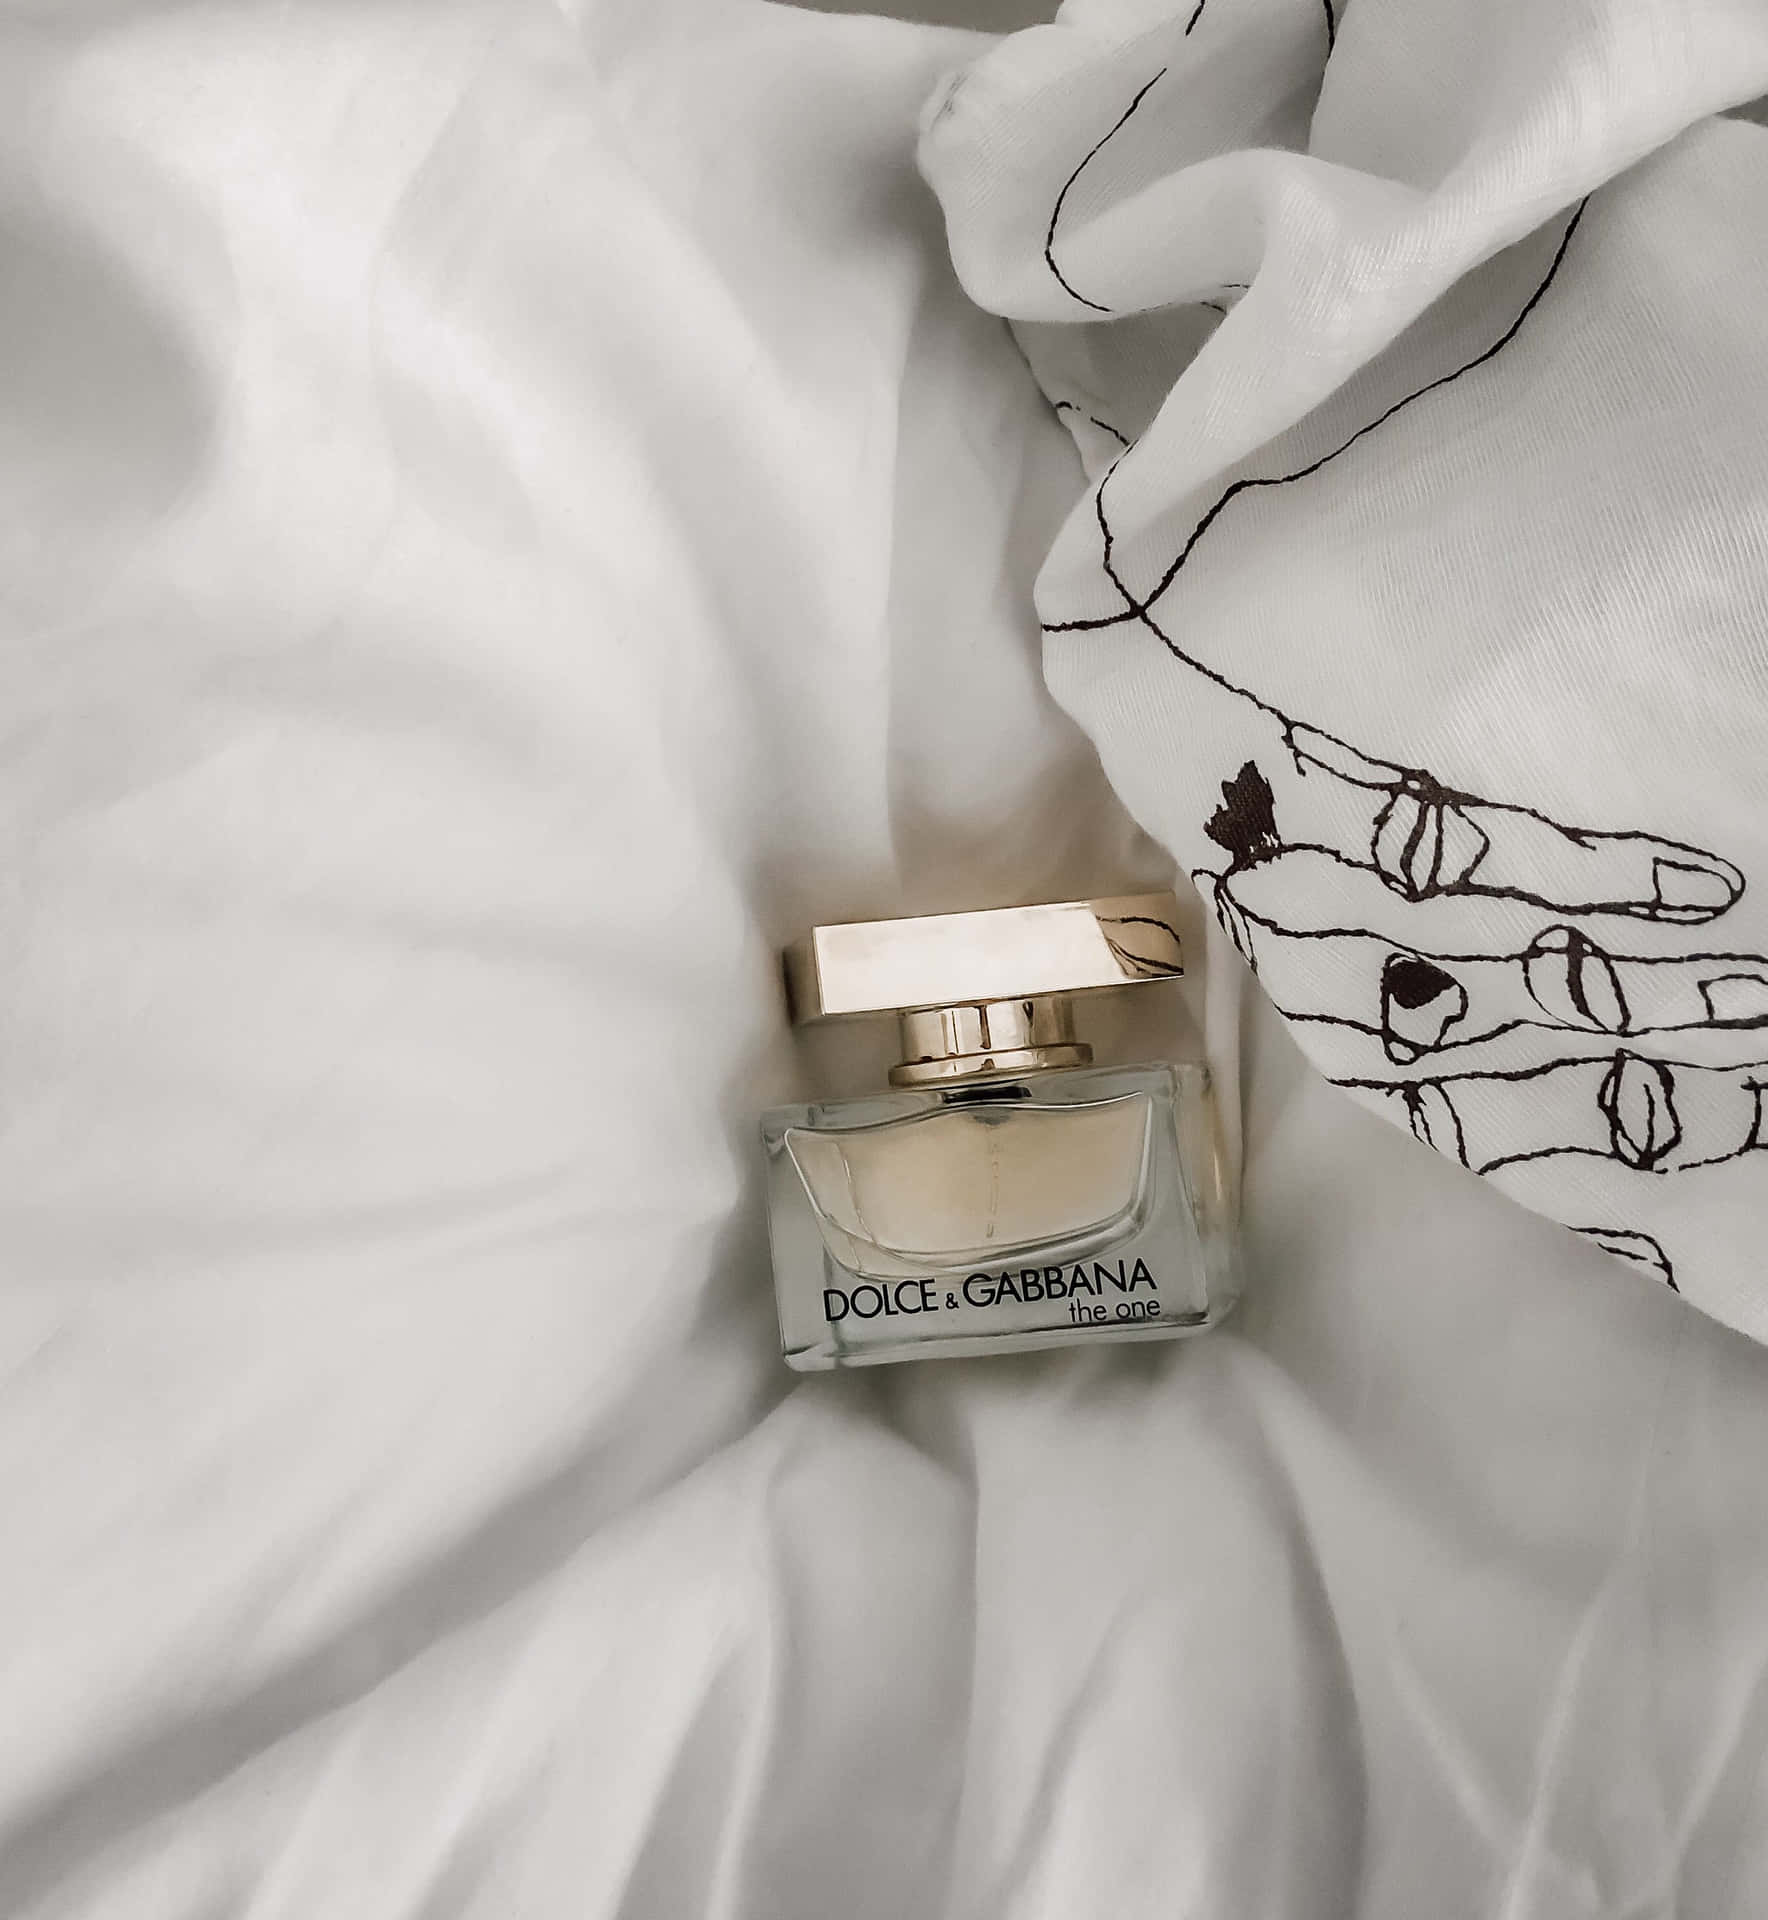 Designer Perfume - Let the Fragrance of Elegance Last.